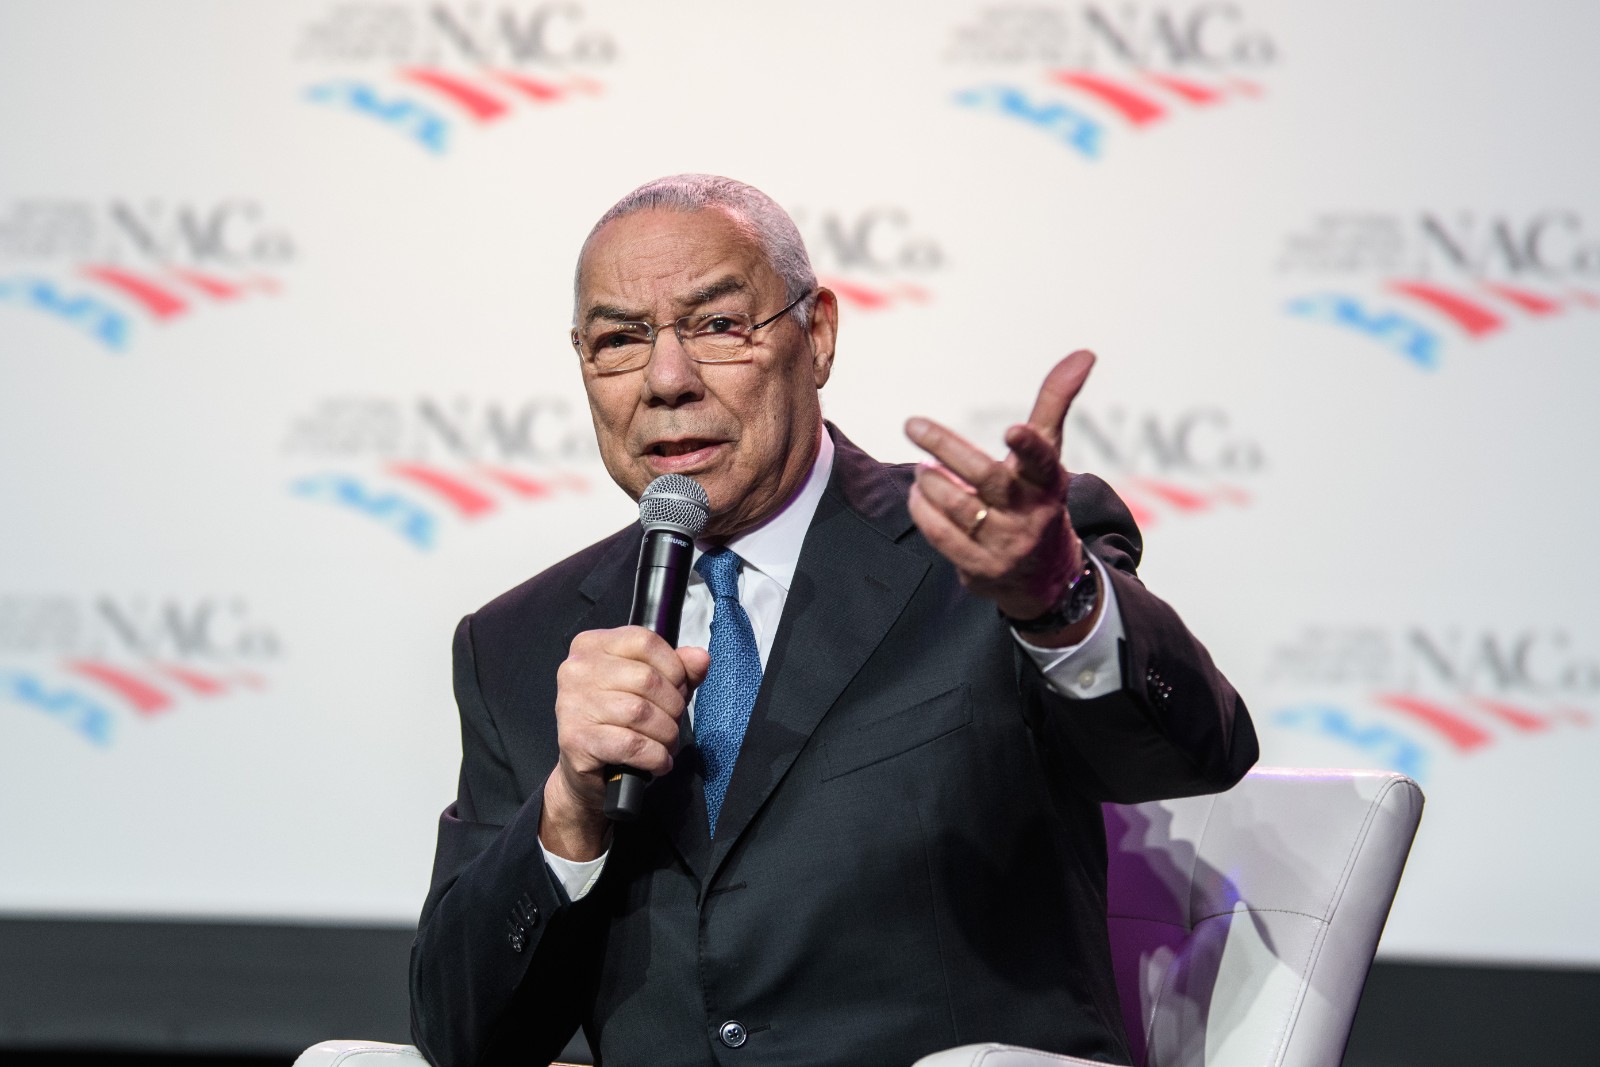 General Colin Powell Shares Leadership Skills